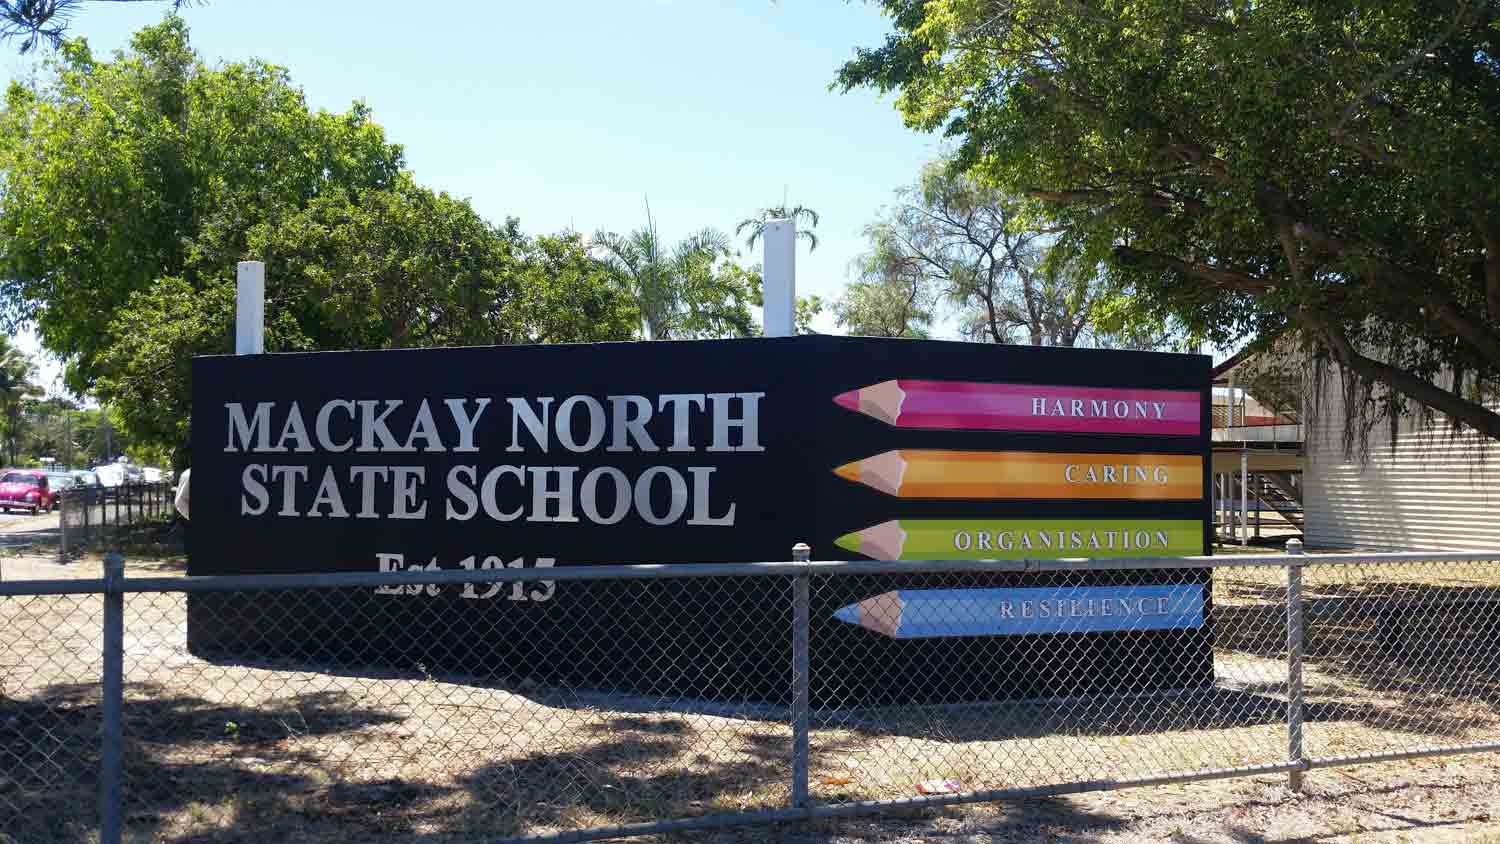 Mackay north state school sign